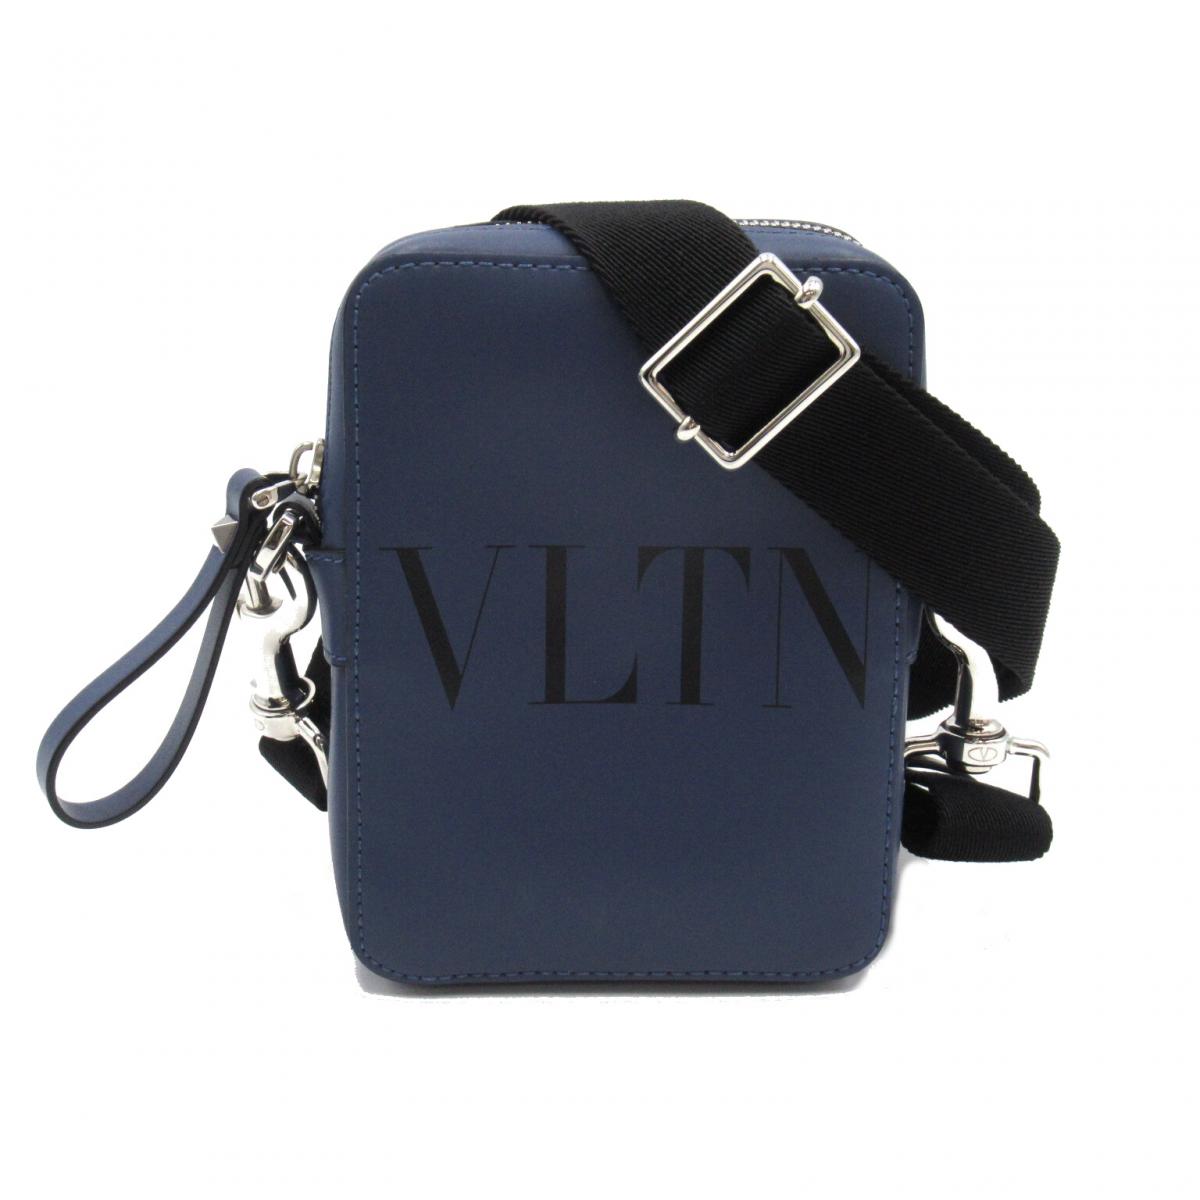 VLTN Leather Crossbody Bag